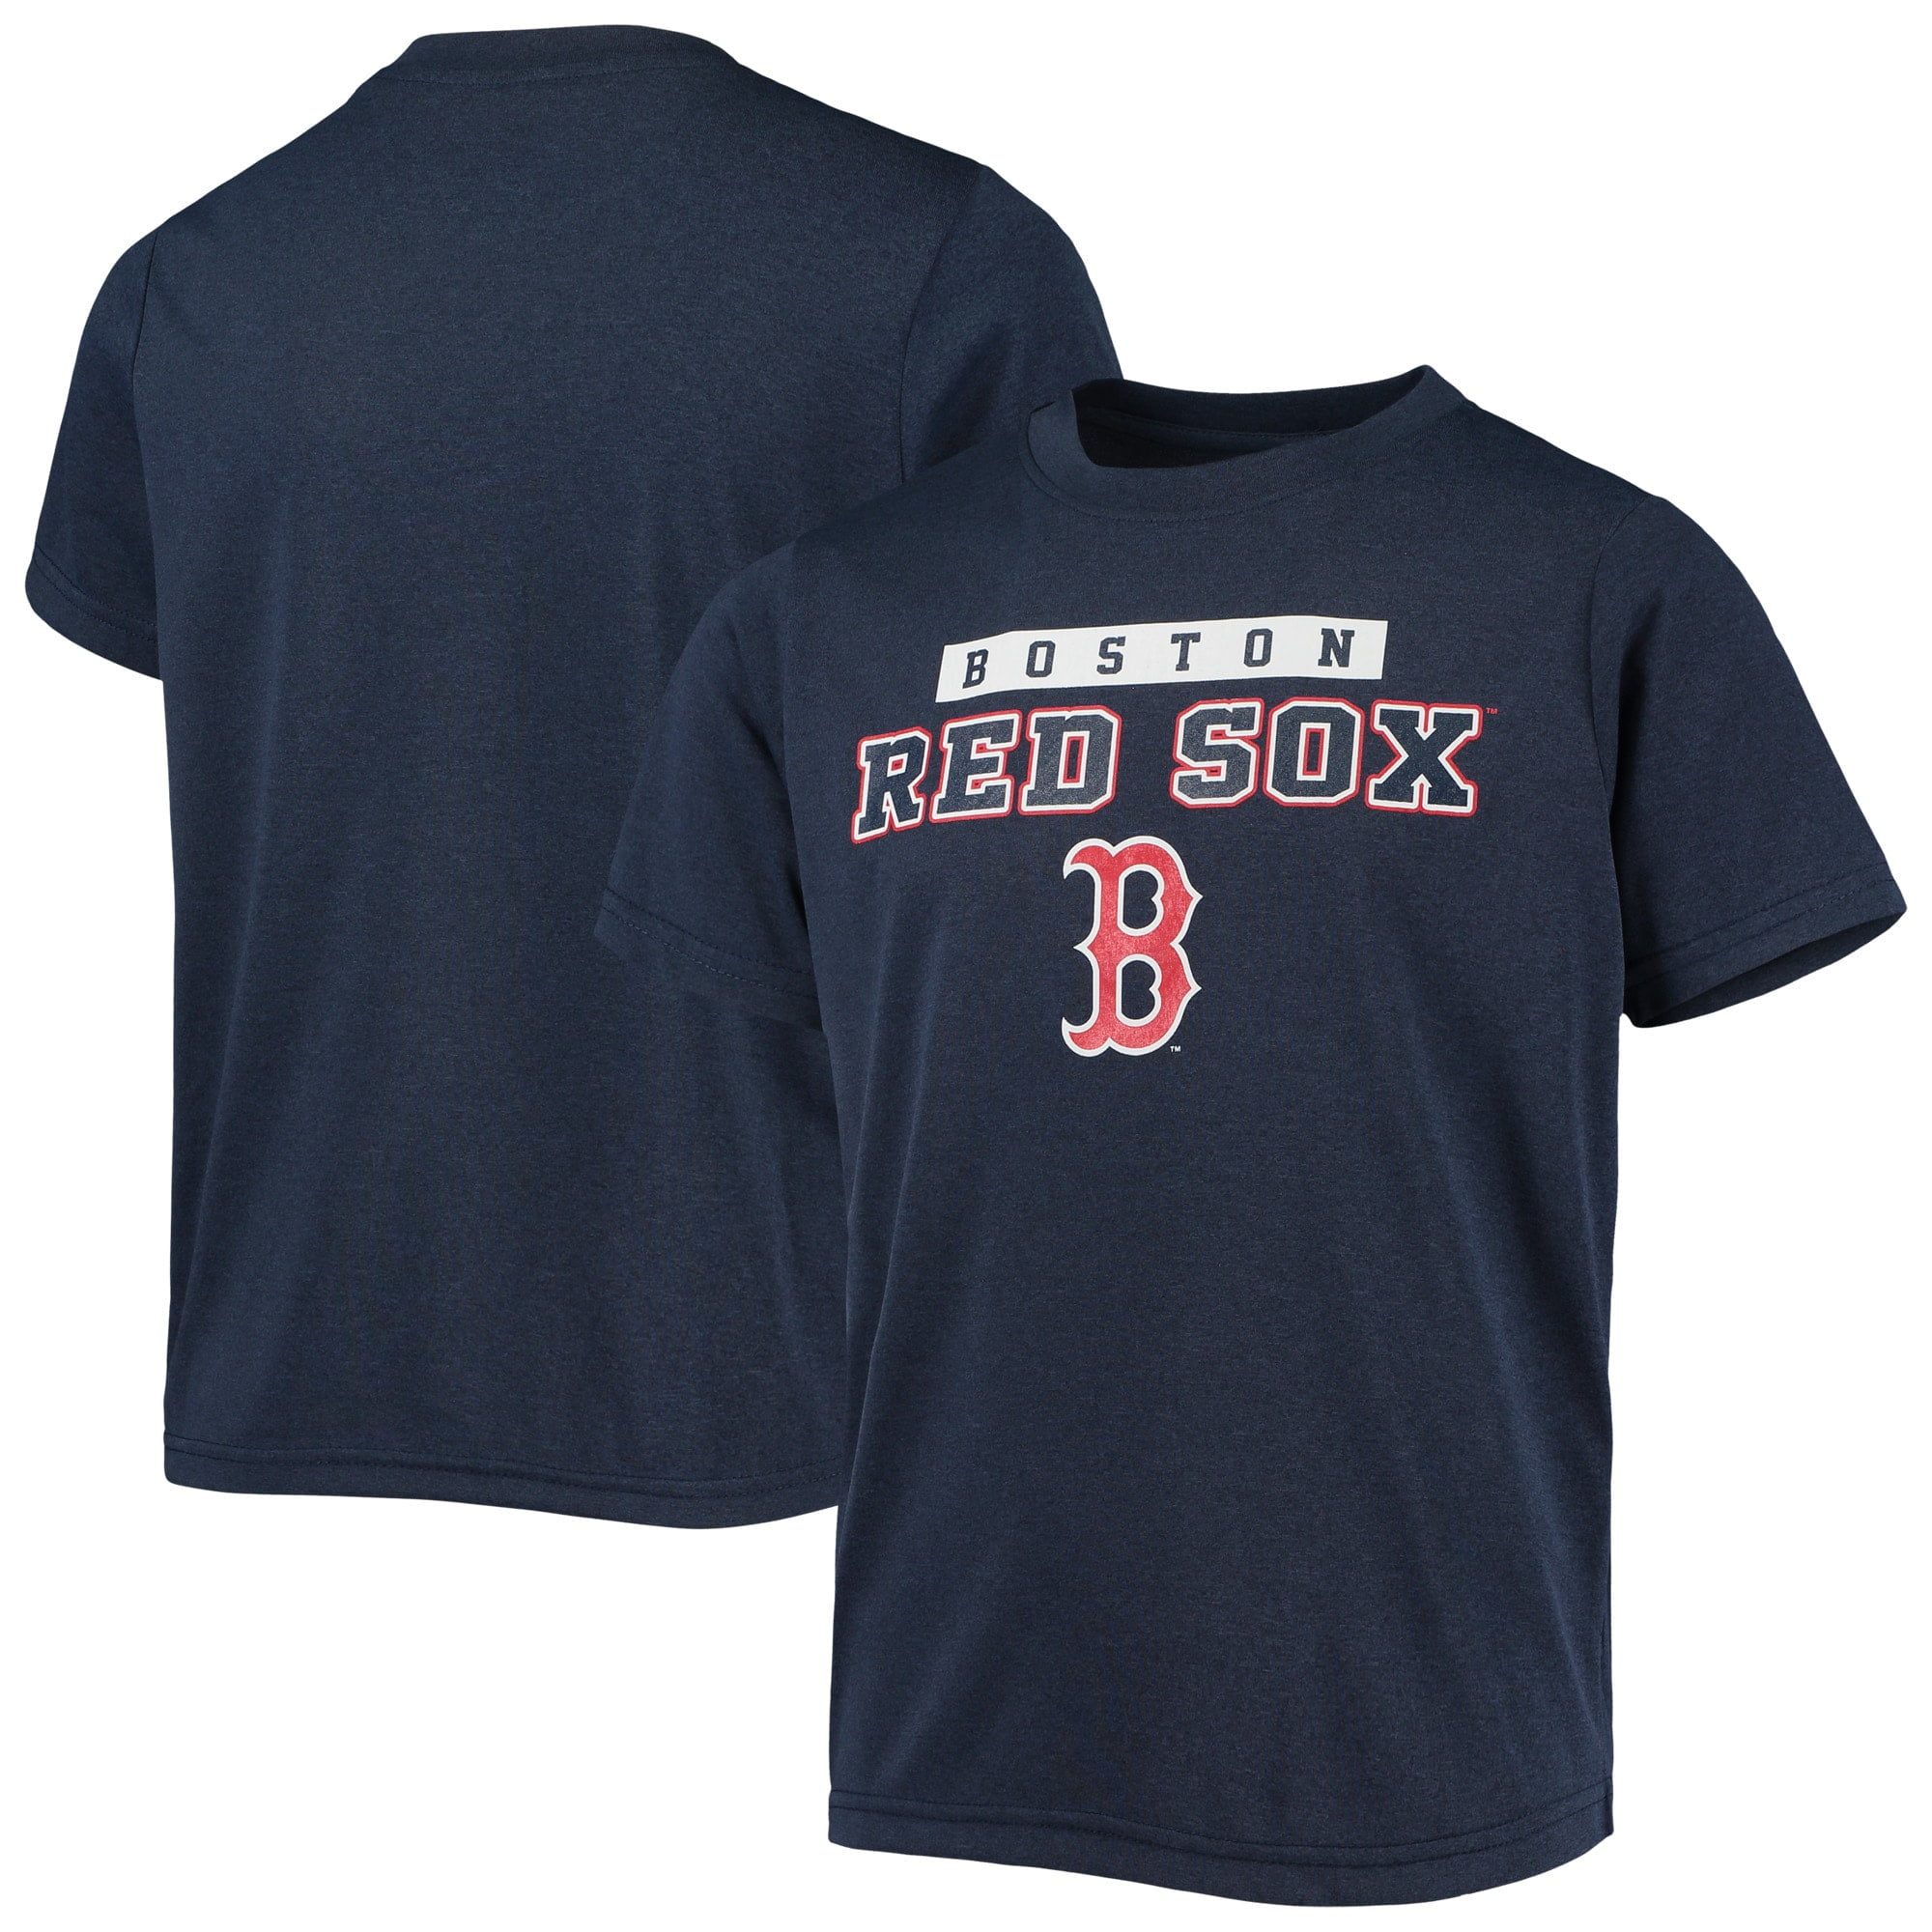 Youth Navy Boston Red Sox Wordmark Baseball T-Shirt 